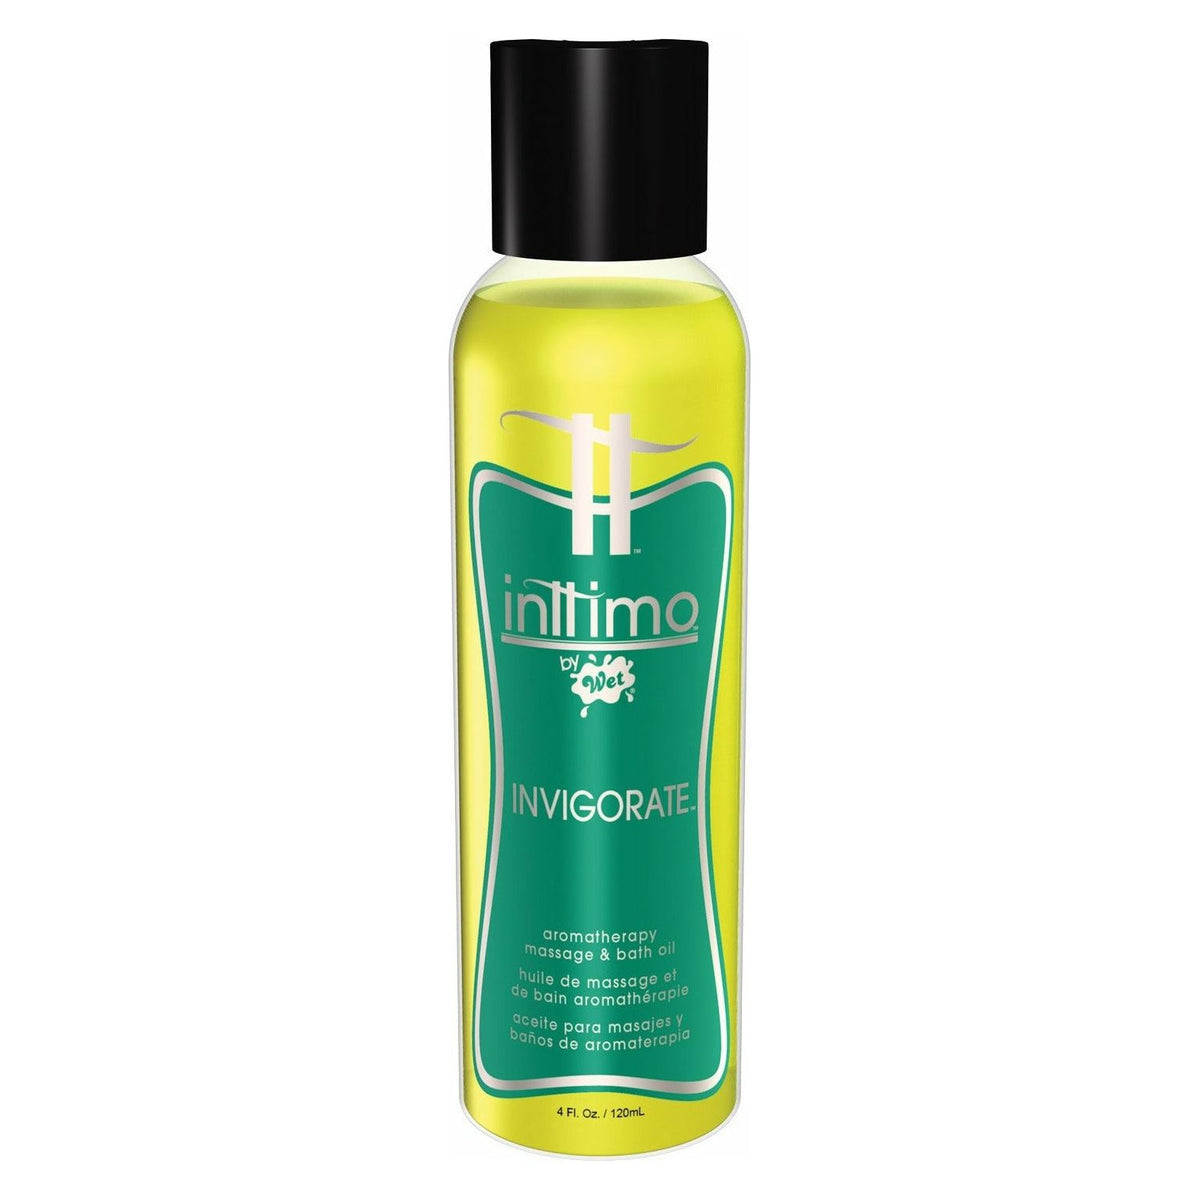 Wet Inttimo Aroma Massage Oil - Invigorate